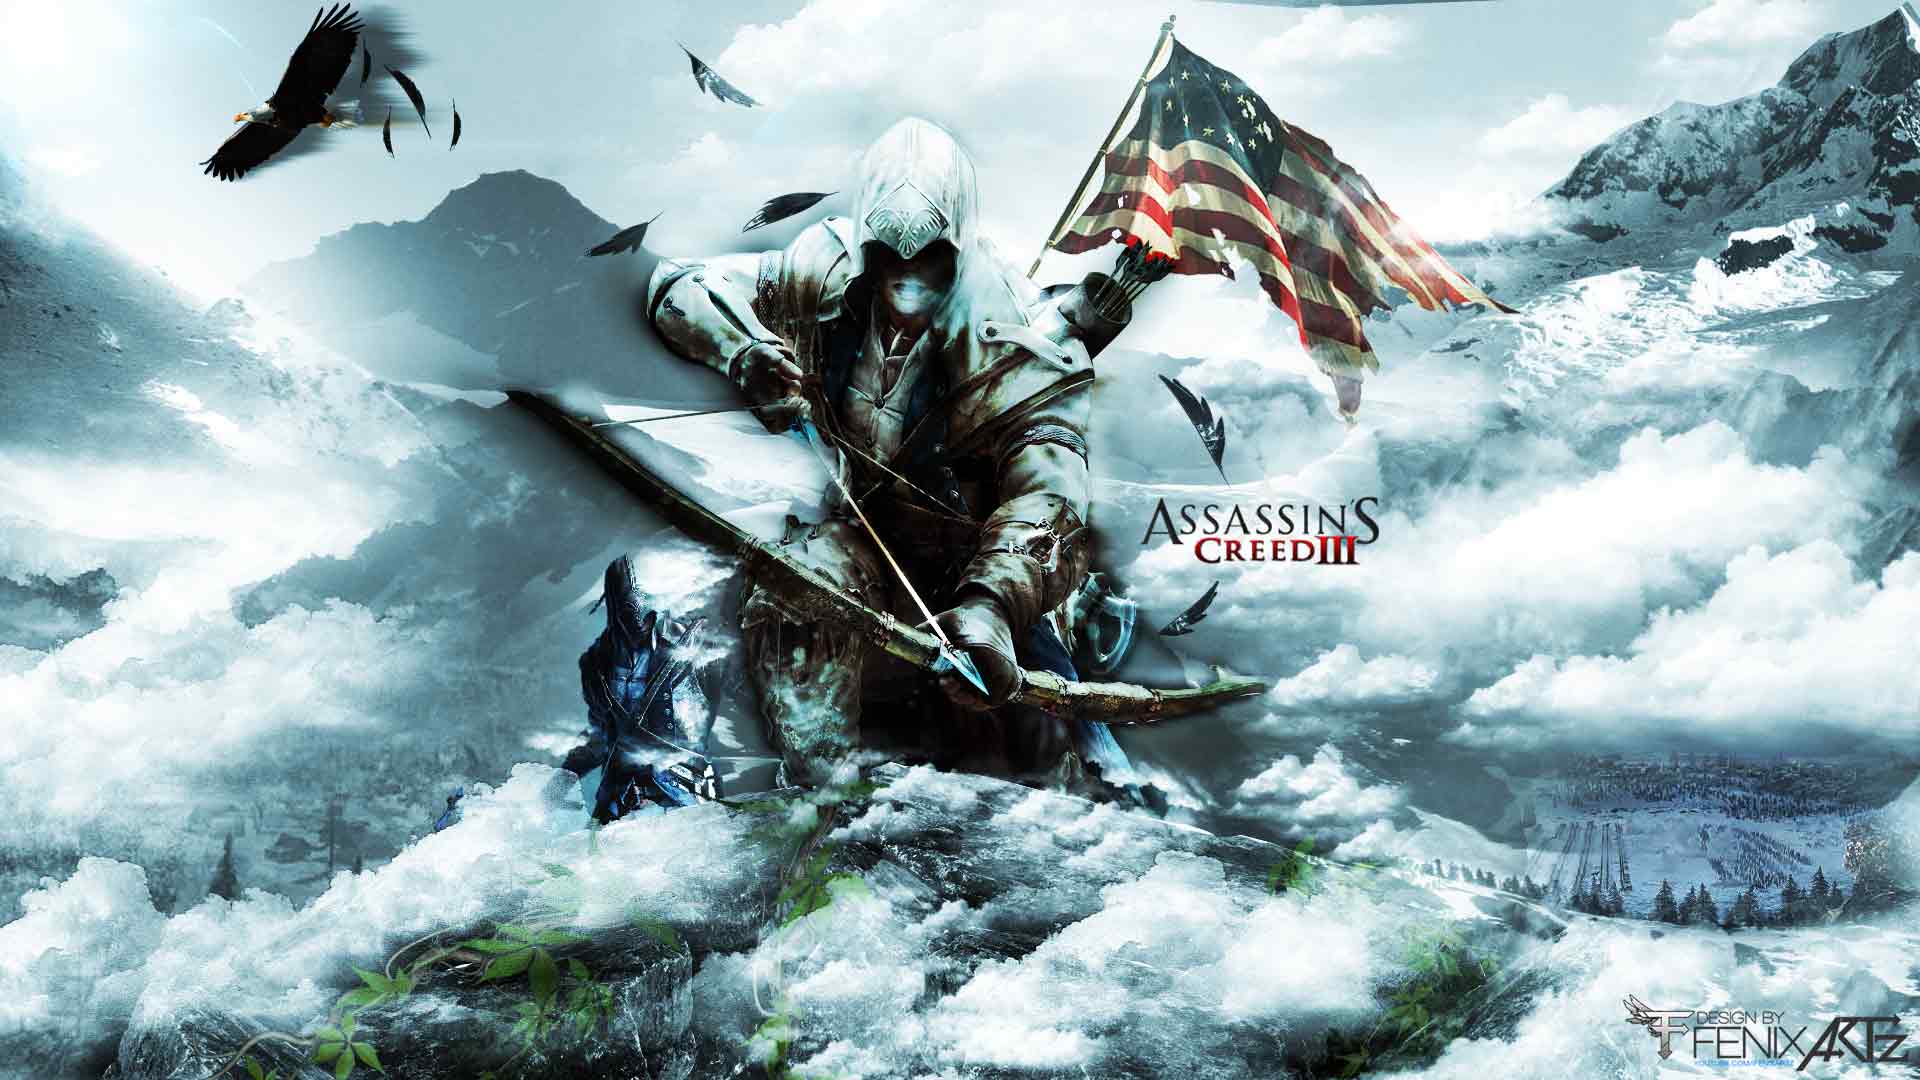 Assassin's Creed 3 - The Assassin's Wallpaper (31733096) - Fanpop